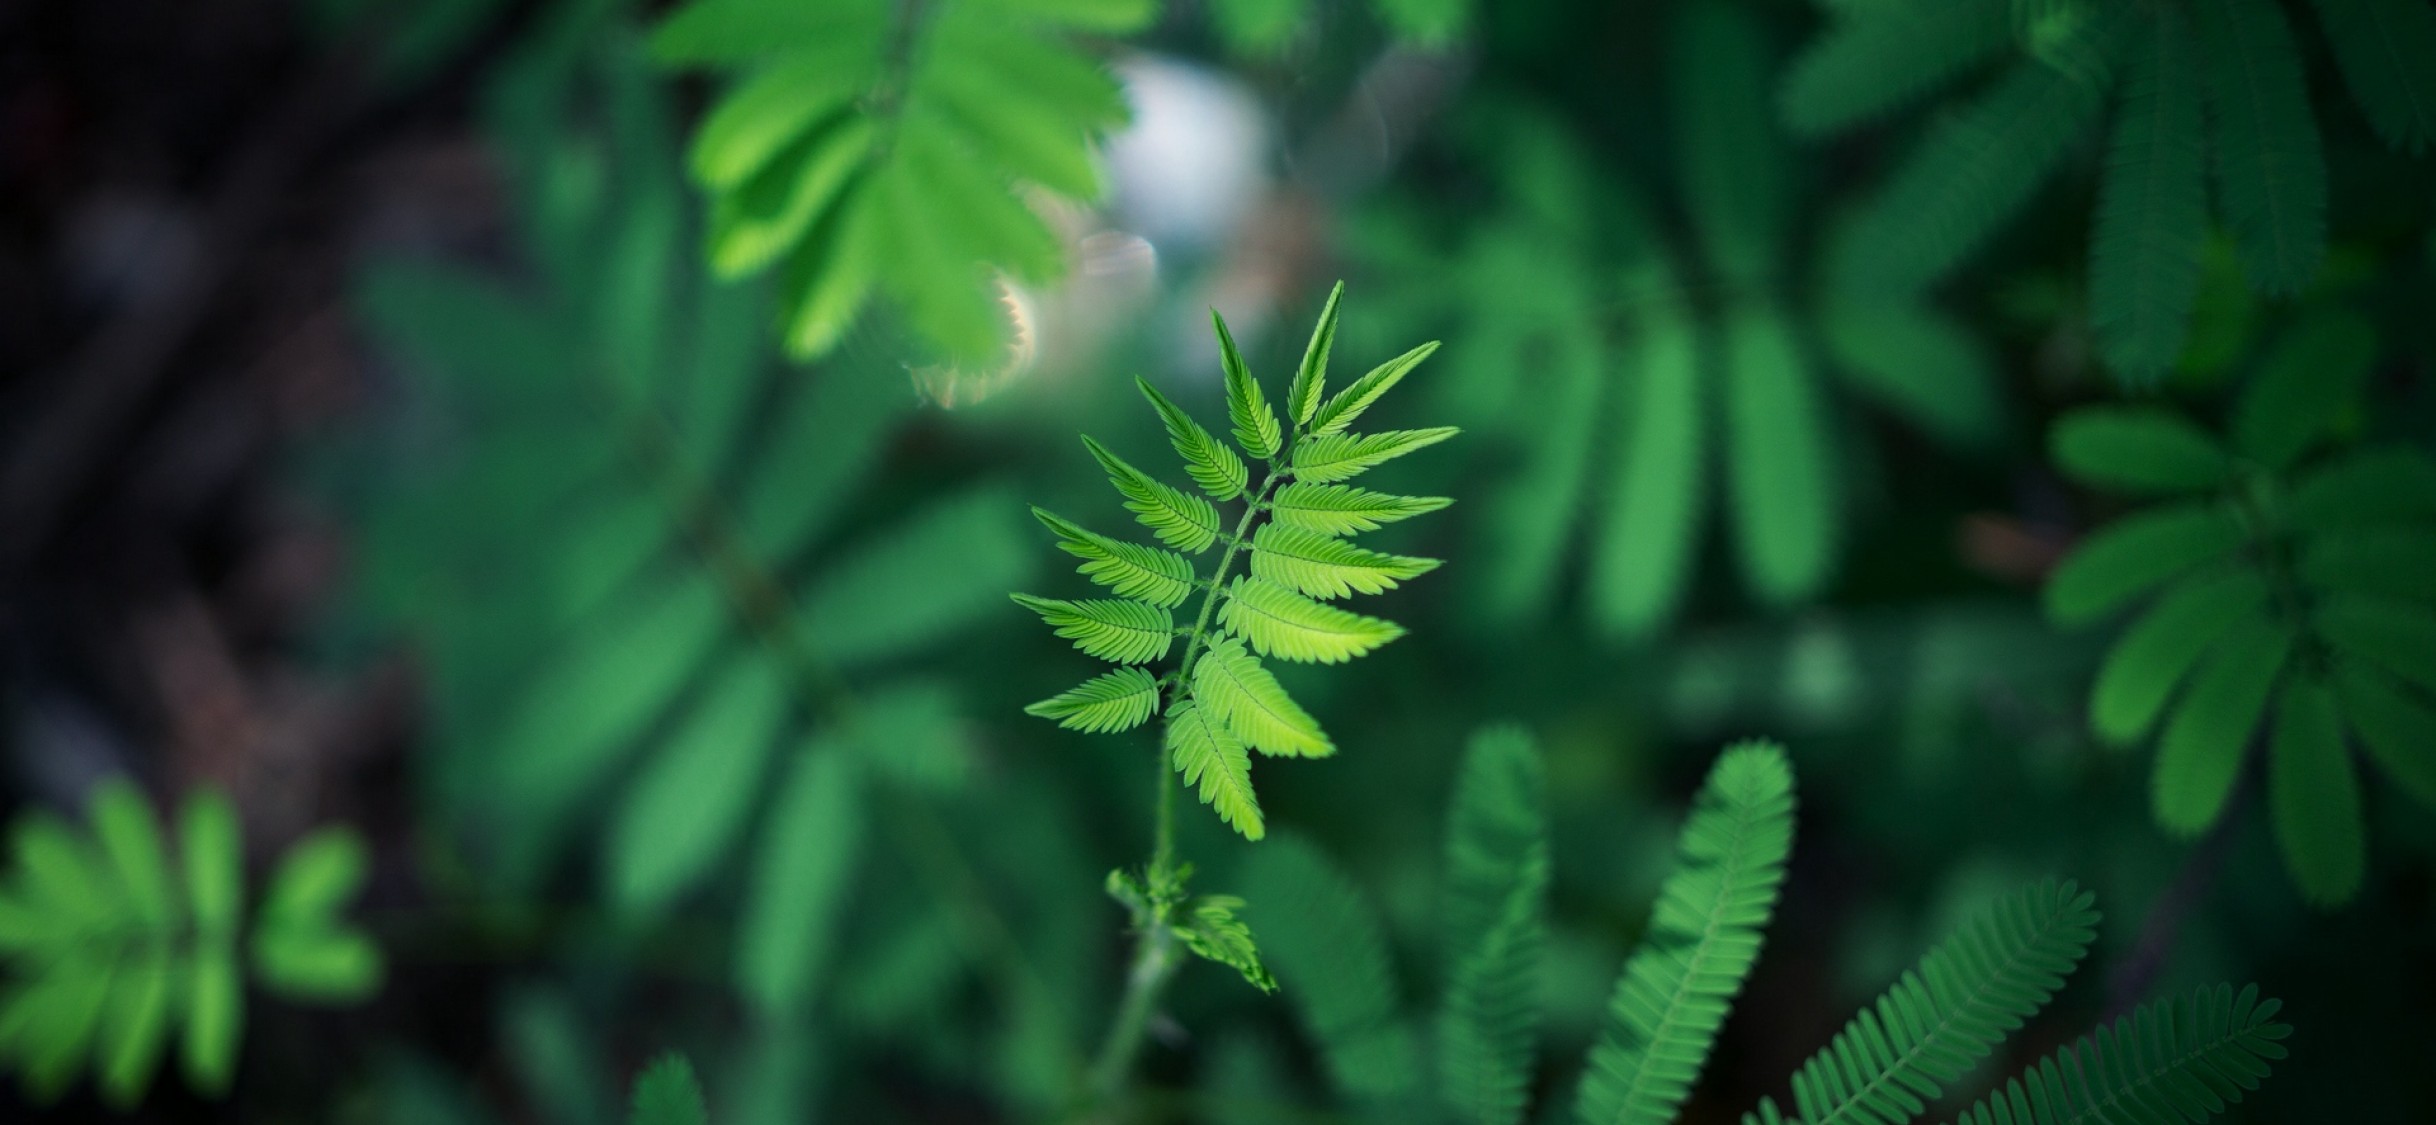 Blurred image of a green leaf HD Wallpaper iPhone X - HD Wallpaper